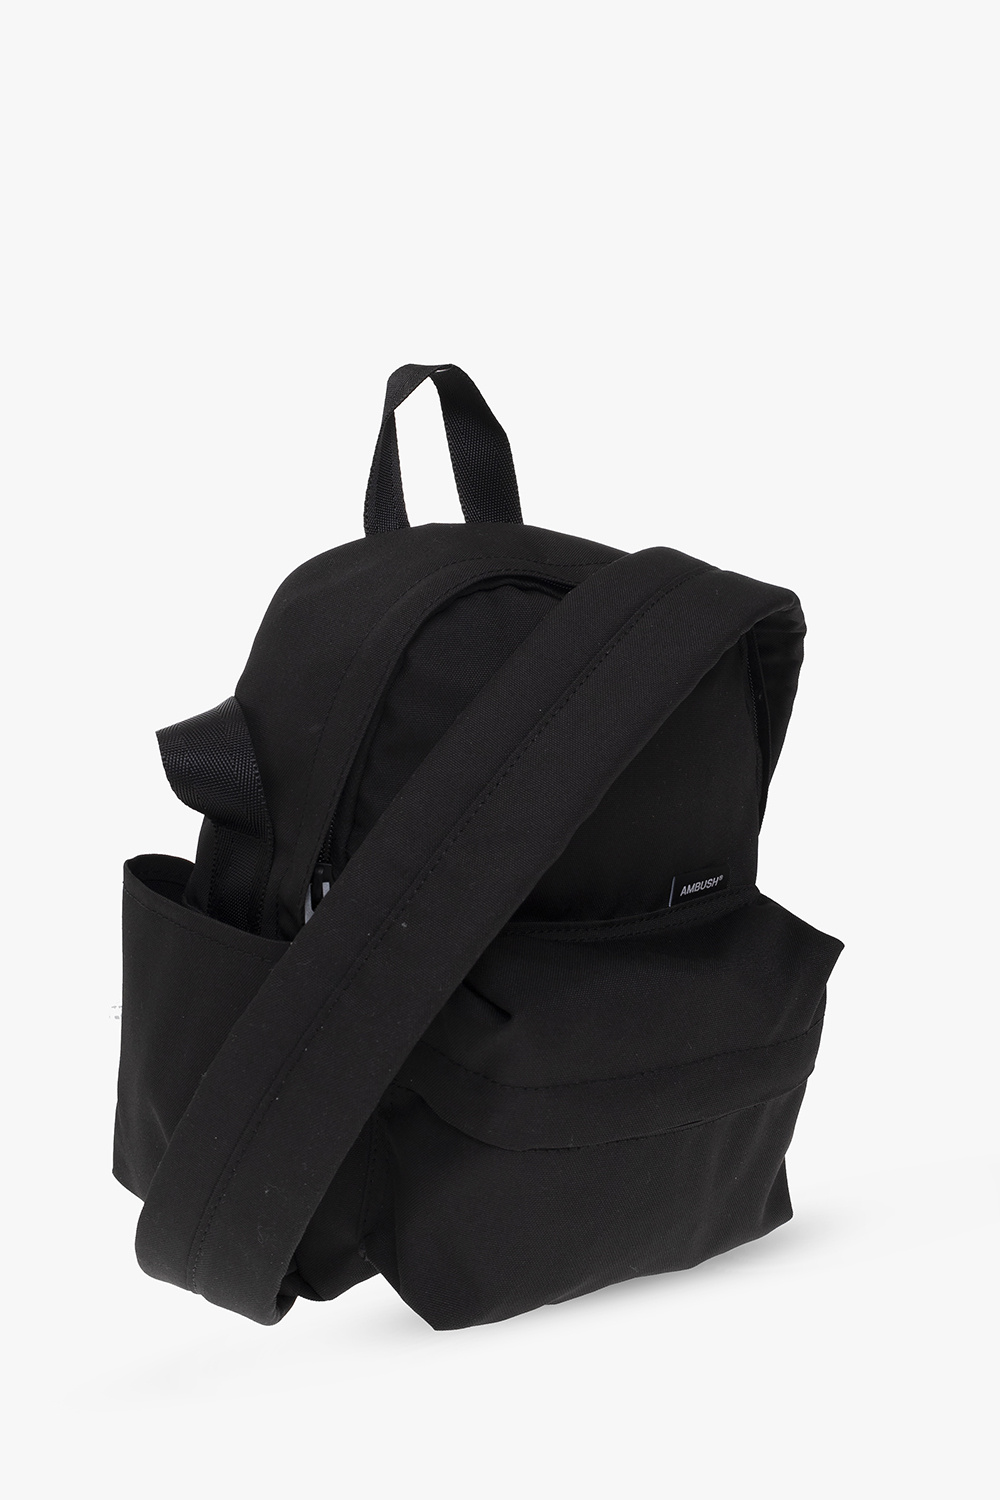 Ambush Core Up Minime Backpack 078711 01